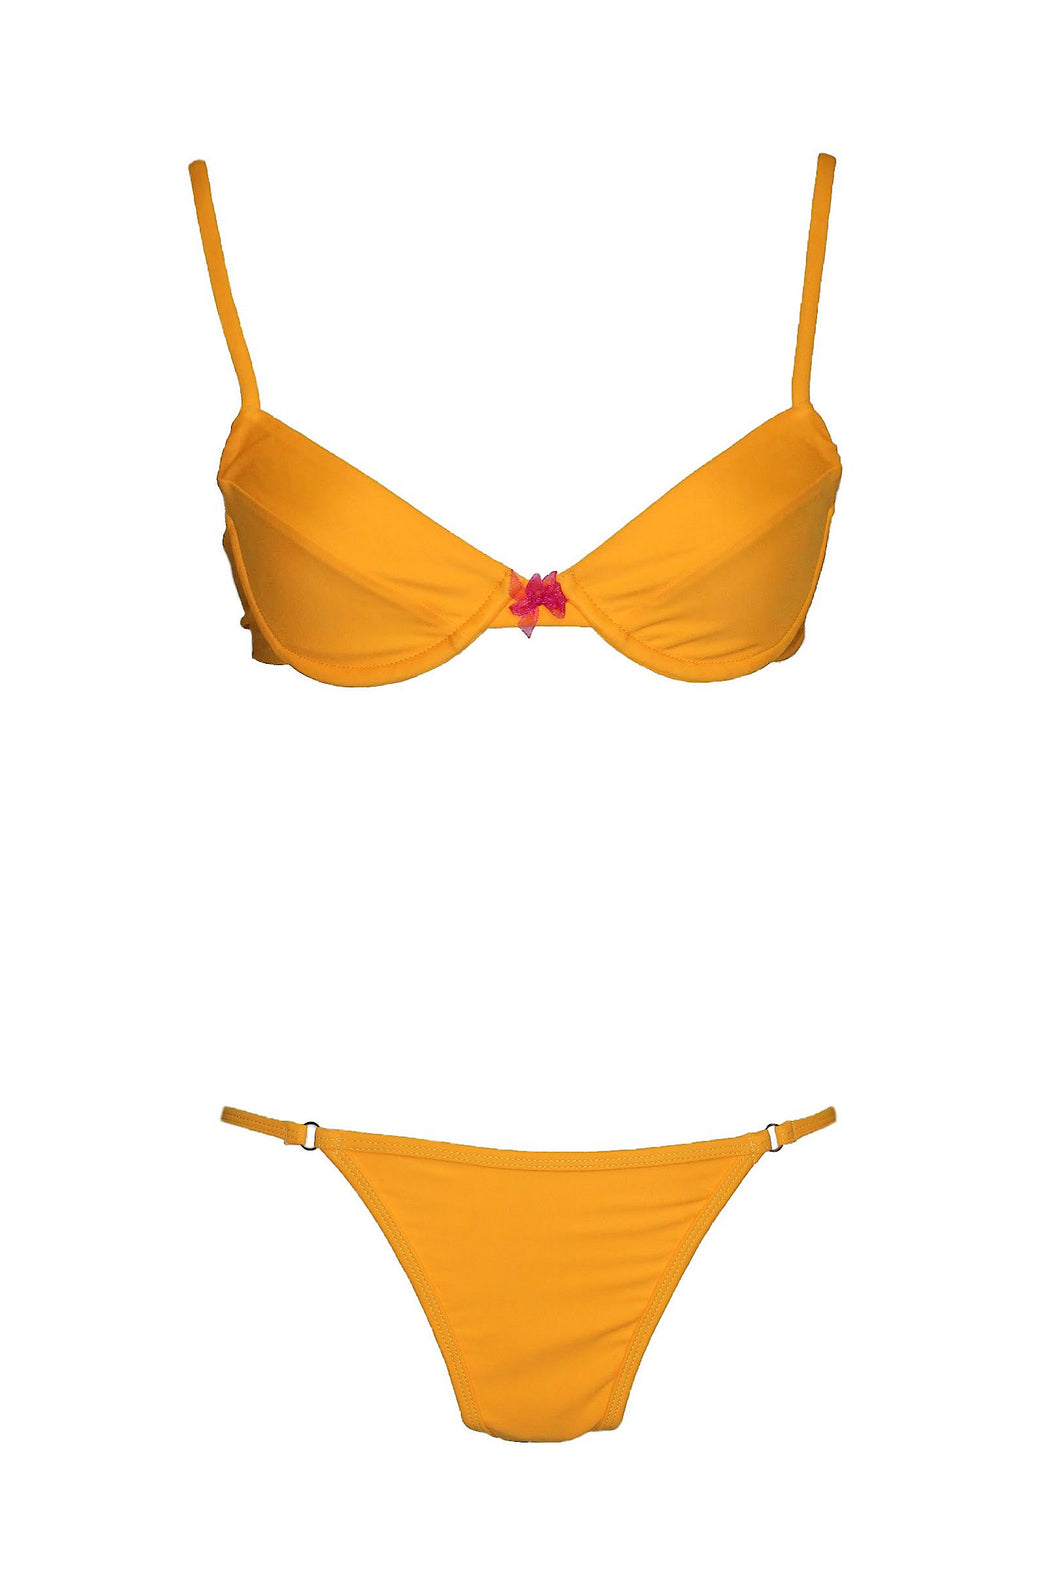 Orange balconette bra made with sustainable fabric.